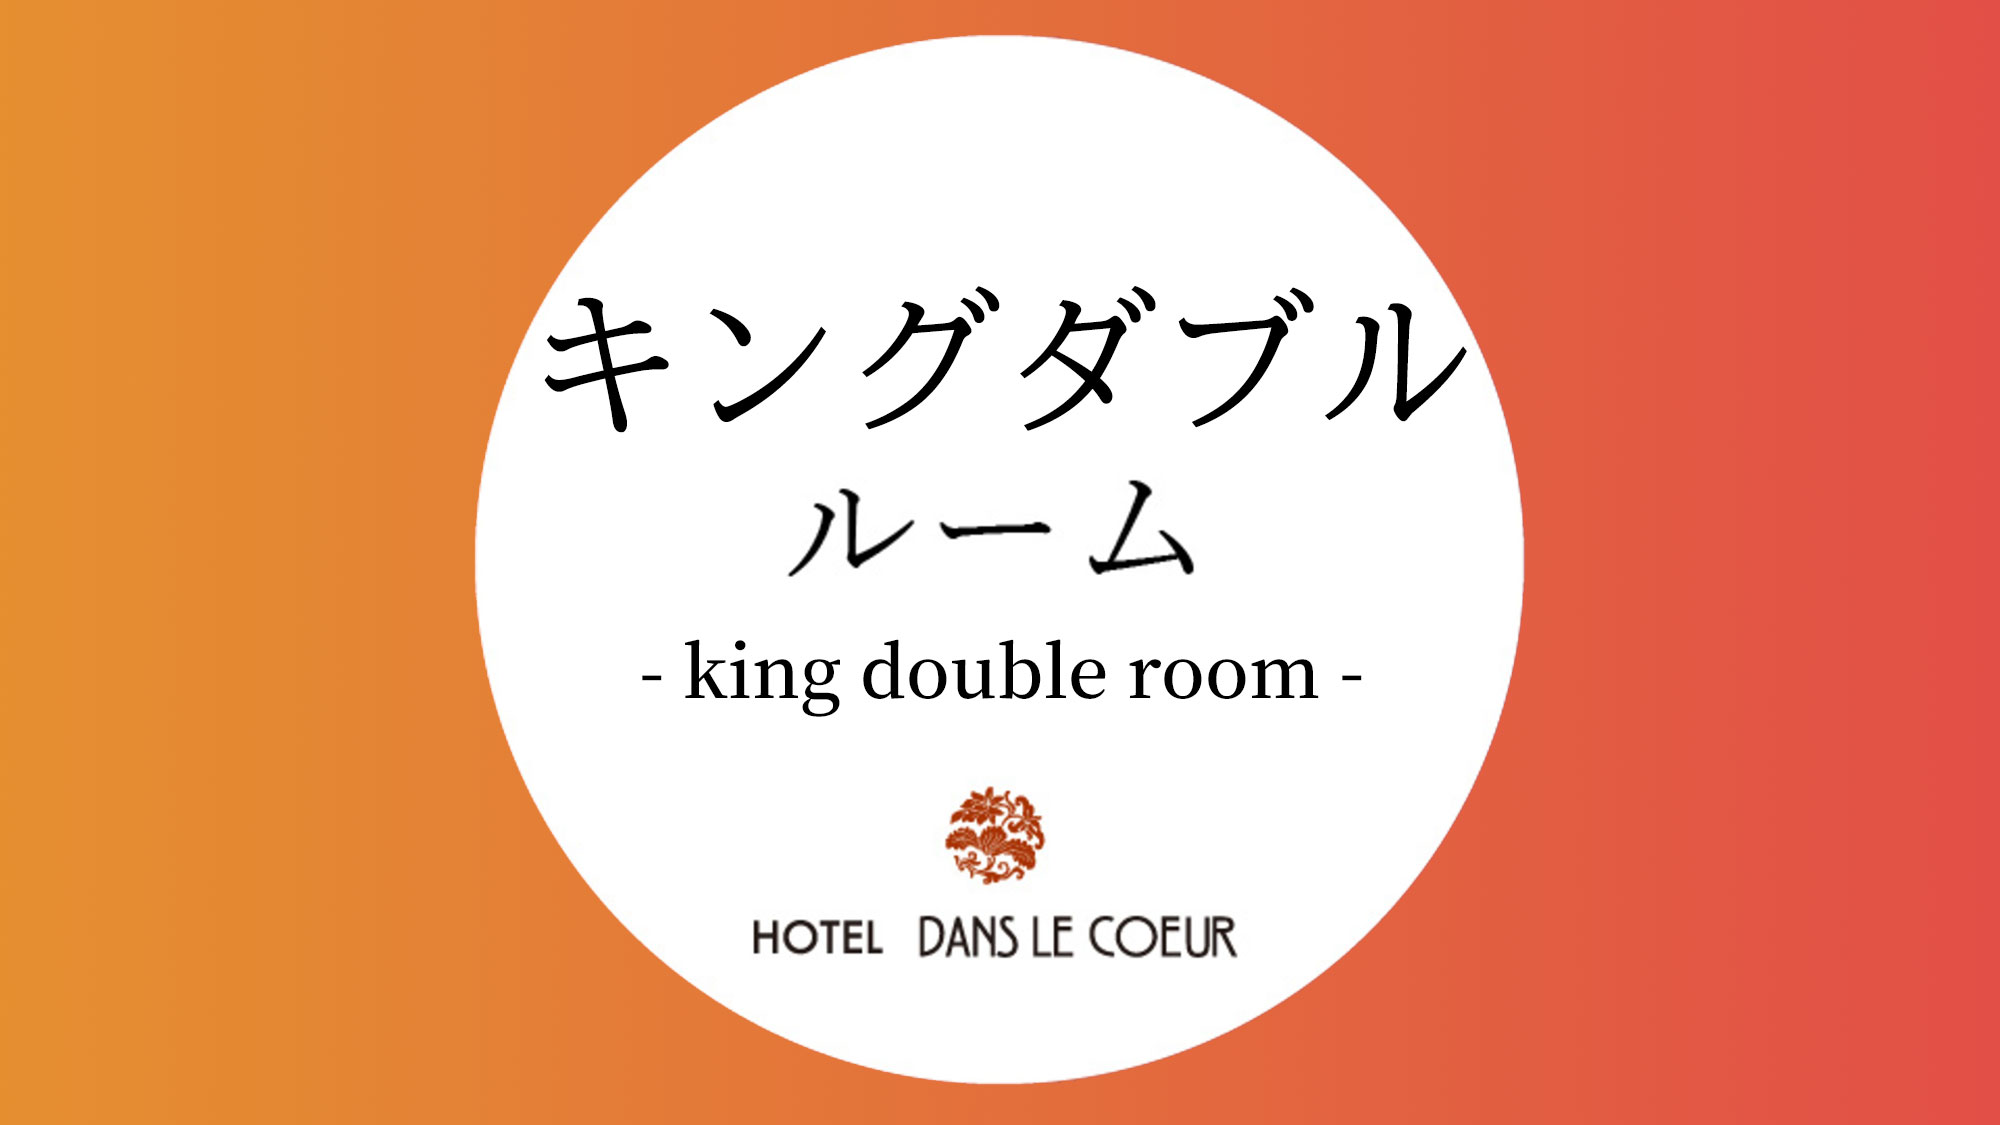 [King Double Room] ベッド幅220 cm 広さ22㎡